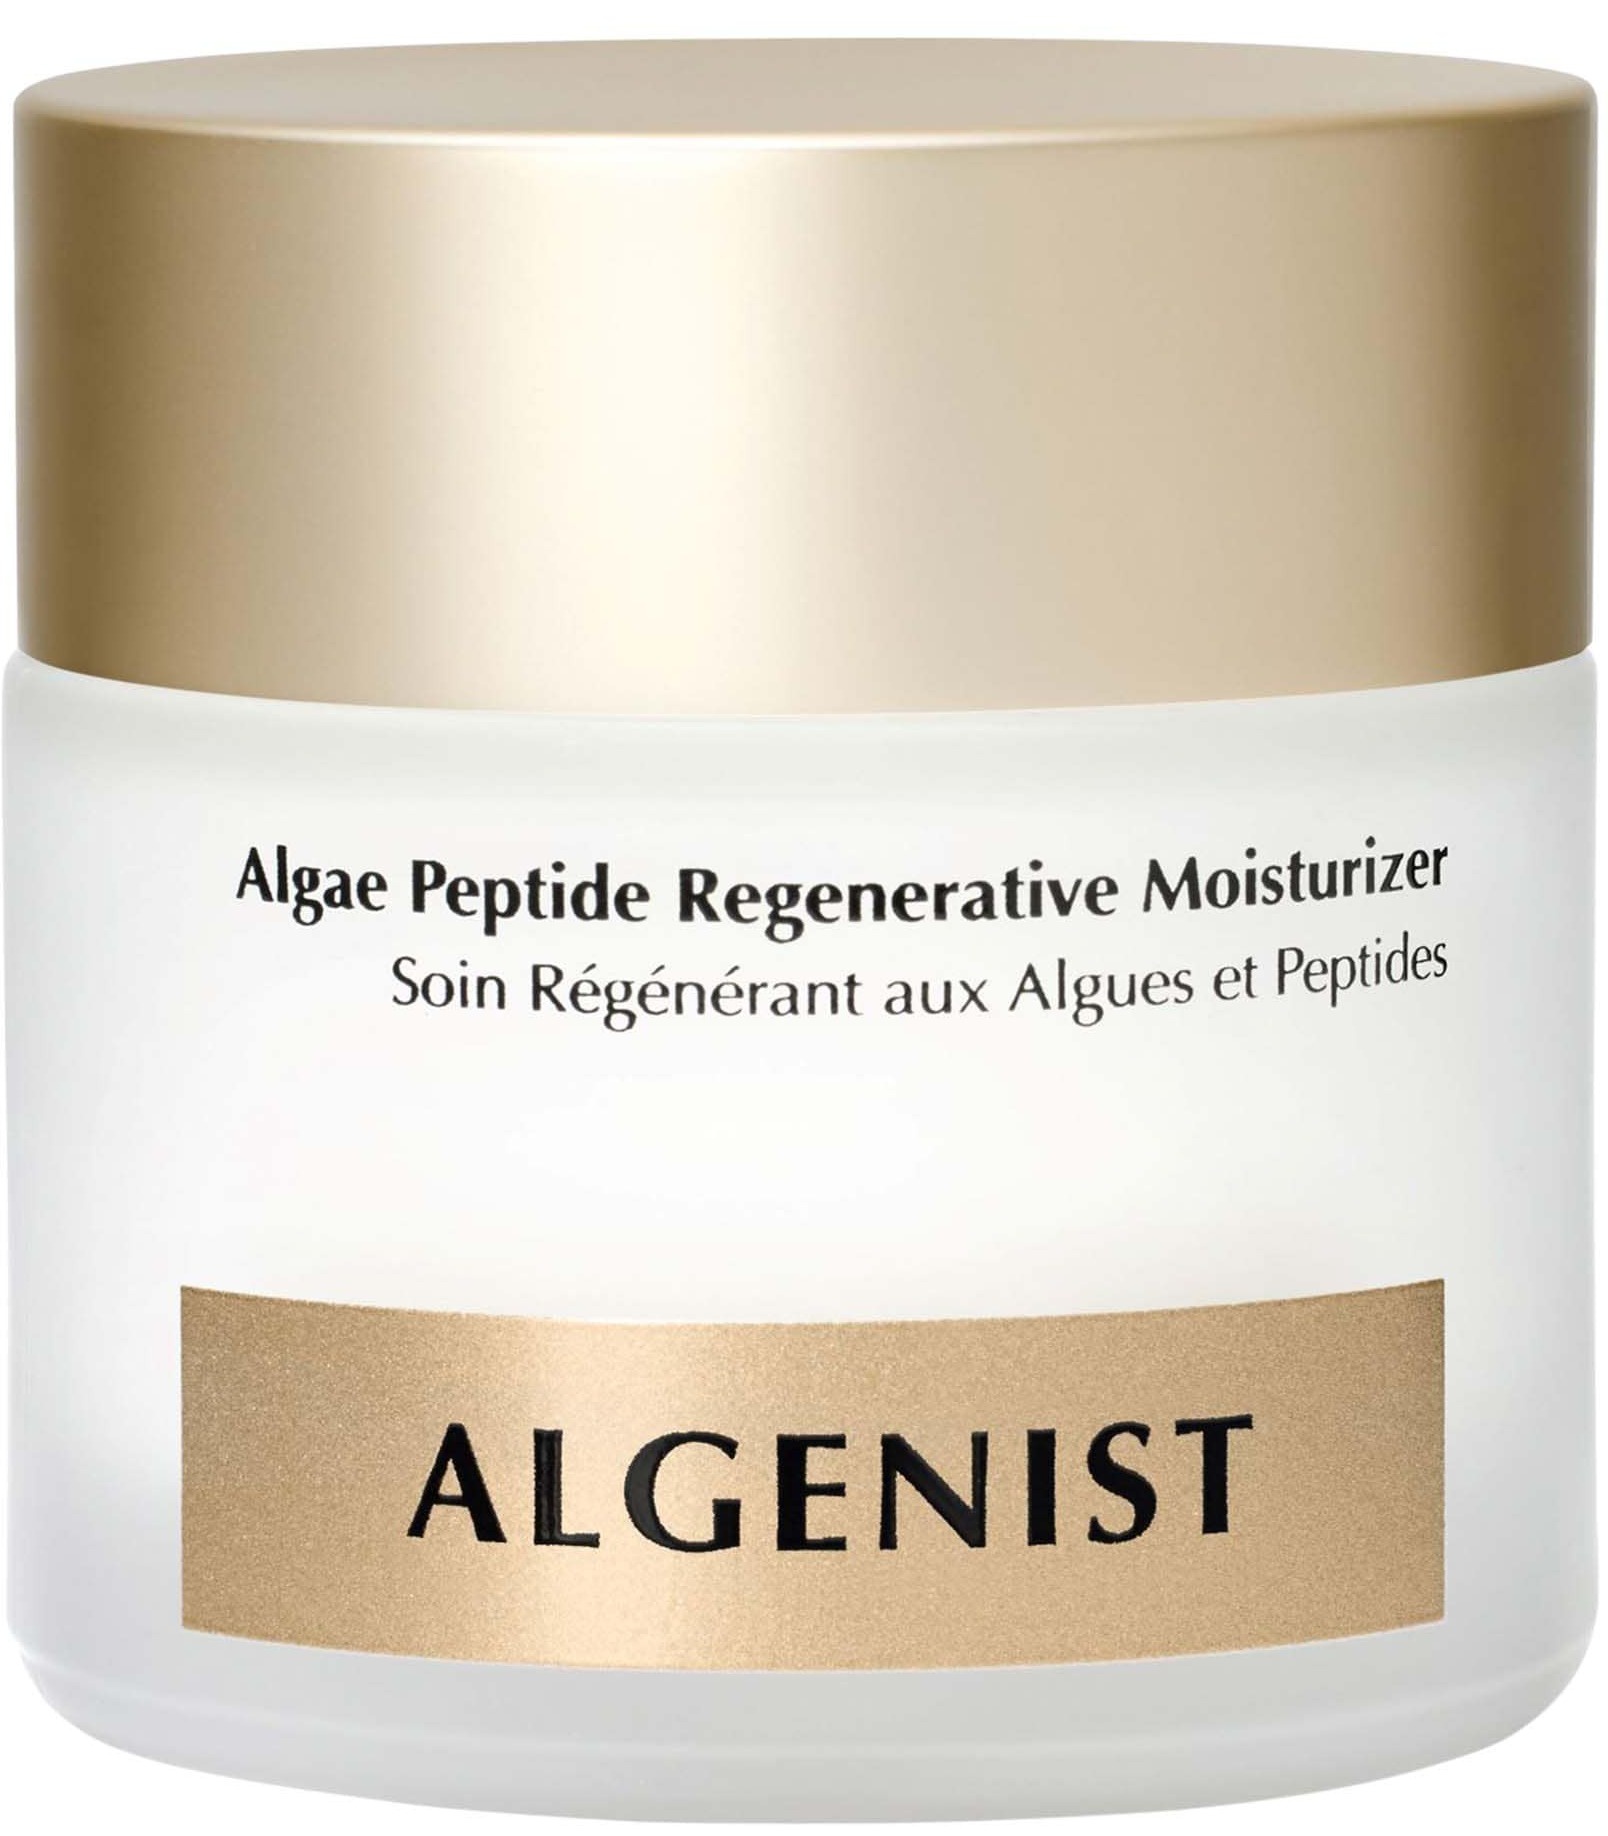 Algenist Algae Peptide Regenerative Moisturizer